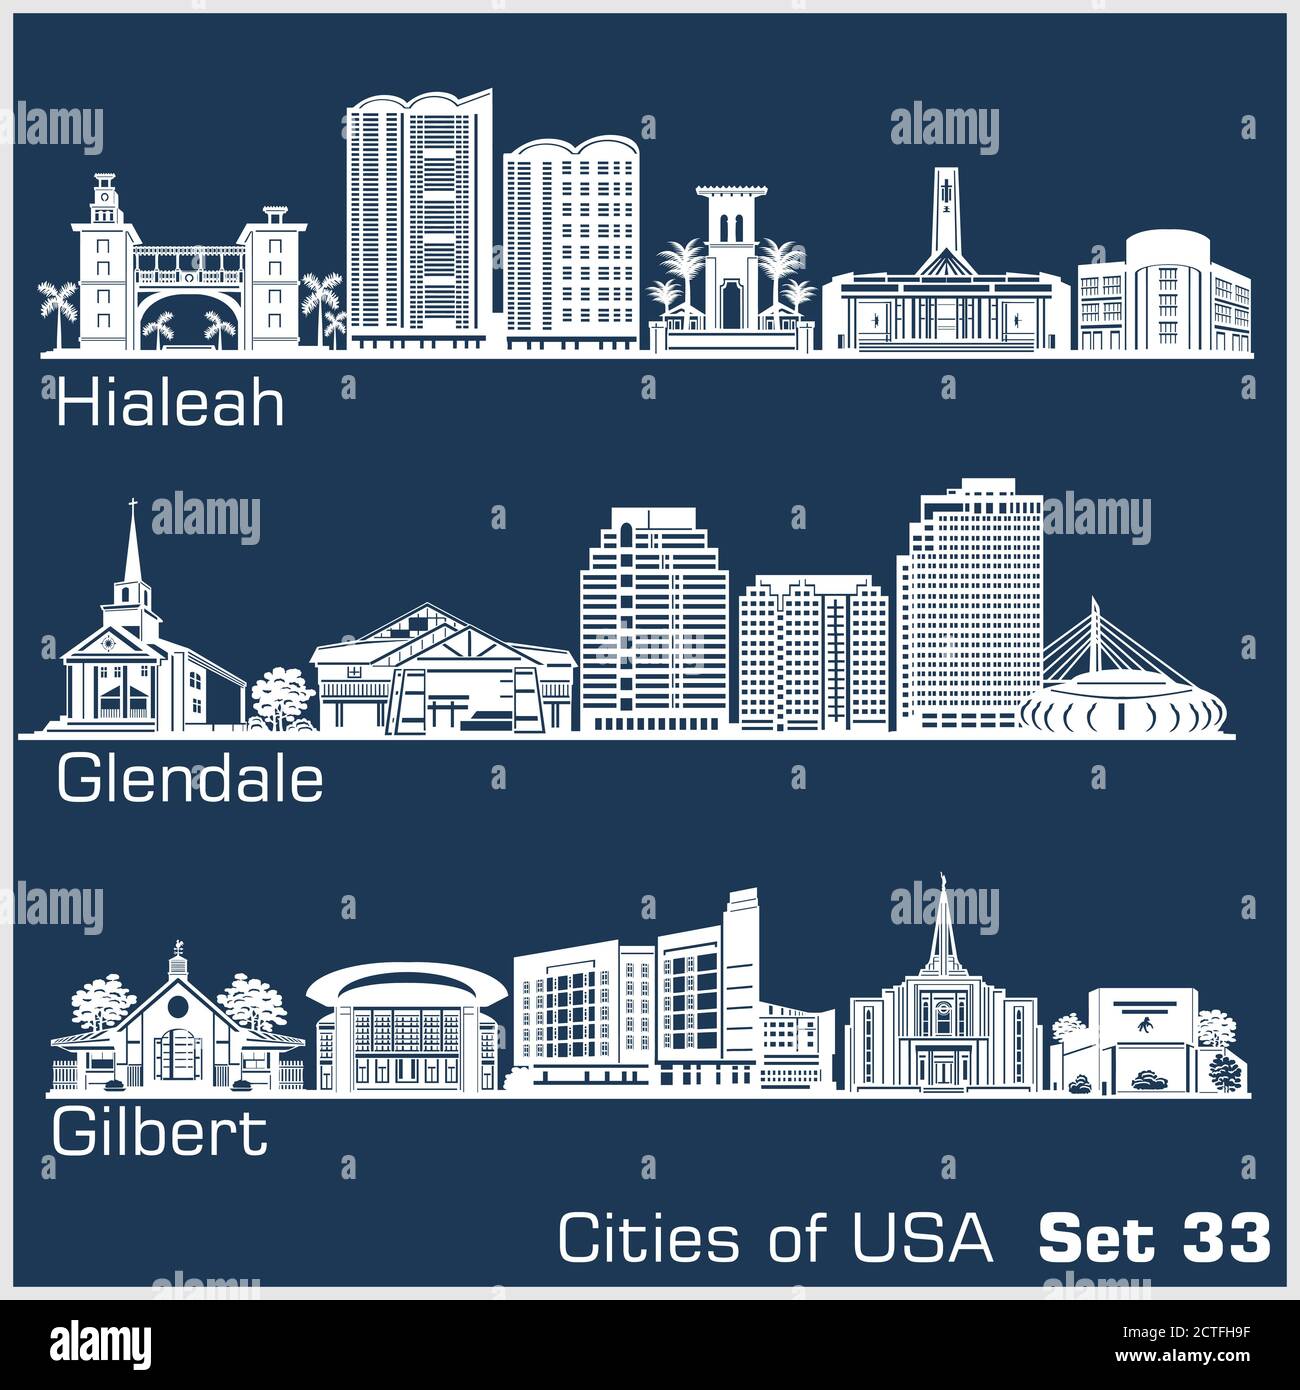 Città degli Stati Uniti - Hialeah, Glendale, Gilbert. Architettura dettagliata. Illustrazione vettoriale alla moda. Illustrazione Vettoriale